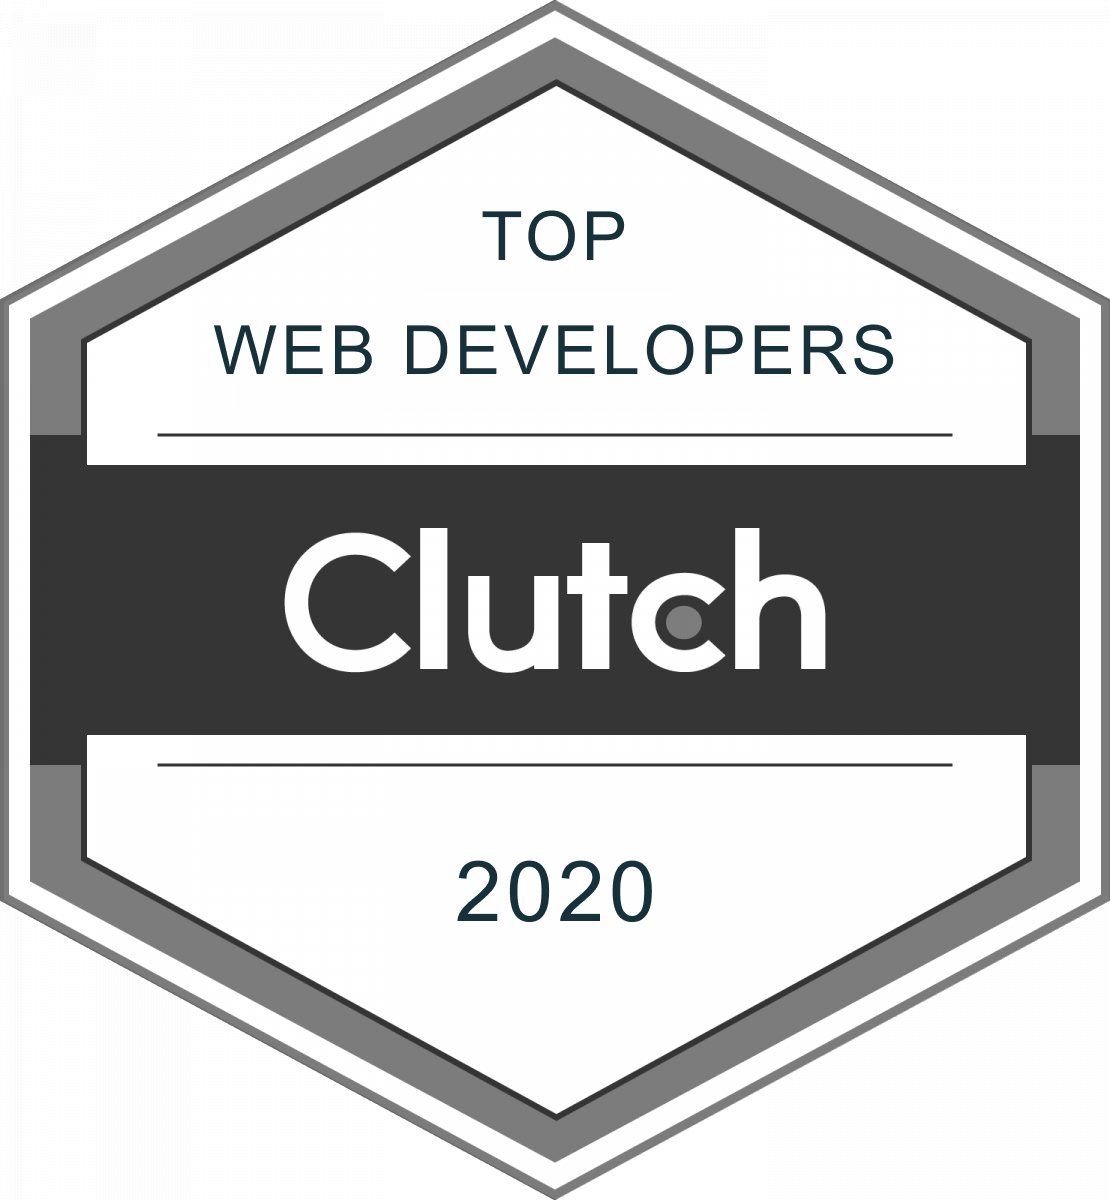 Top Web Developers Clutch